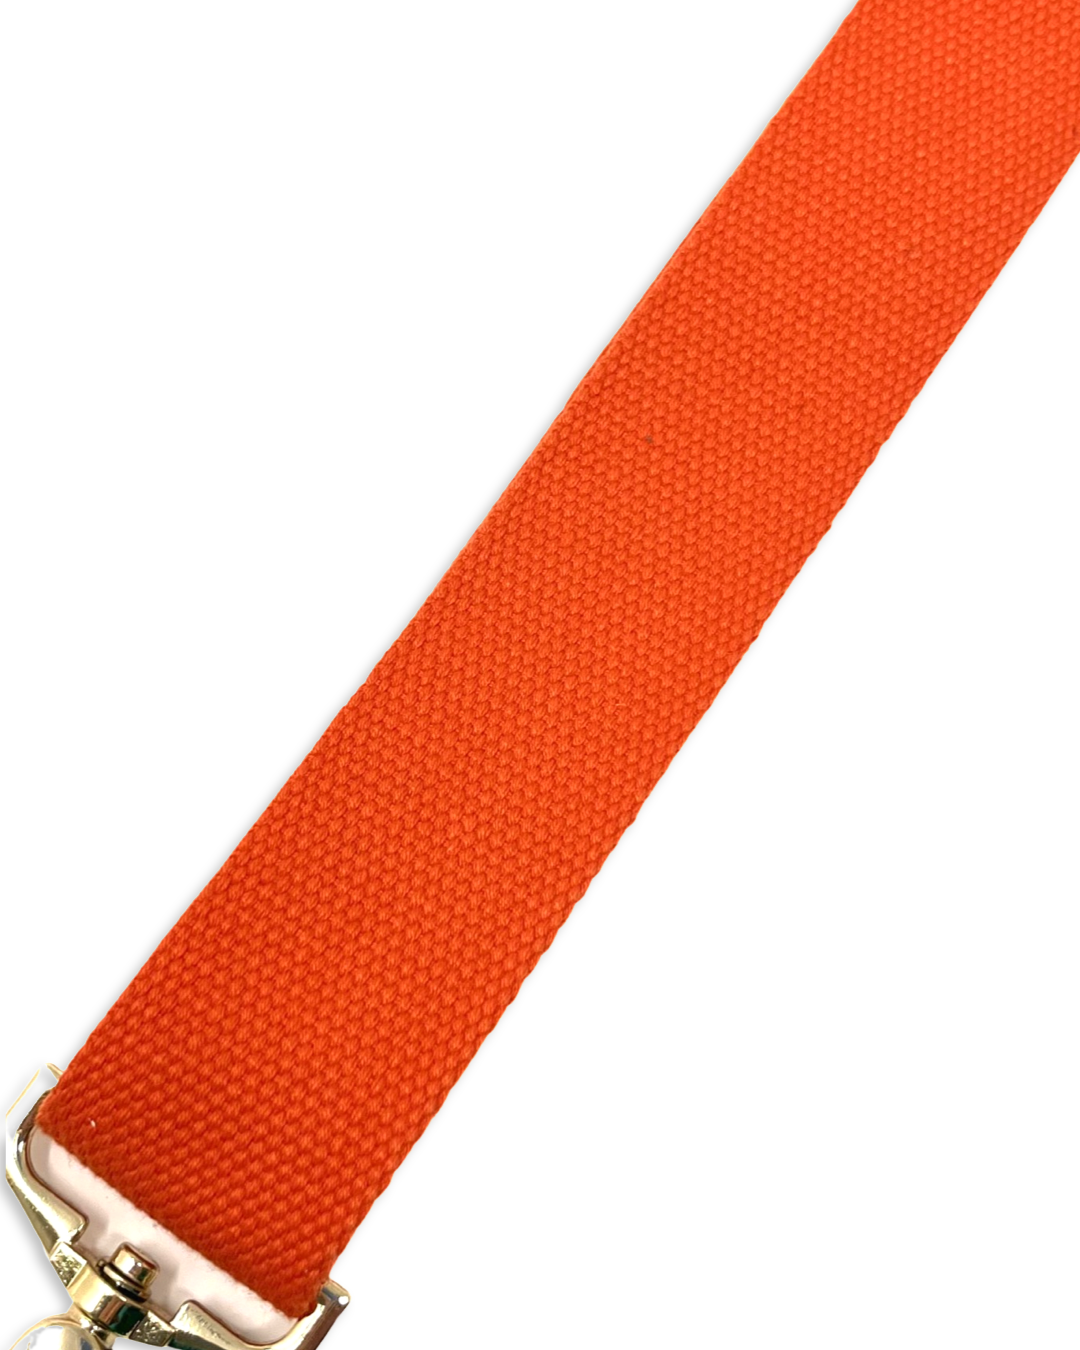 Solid Orange Strap